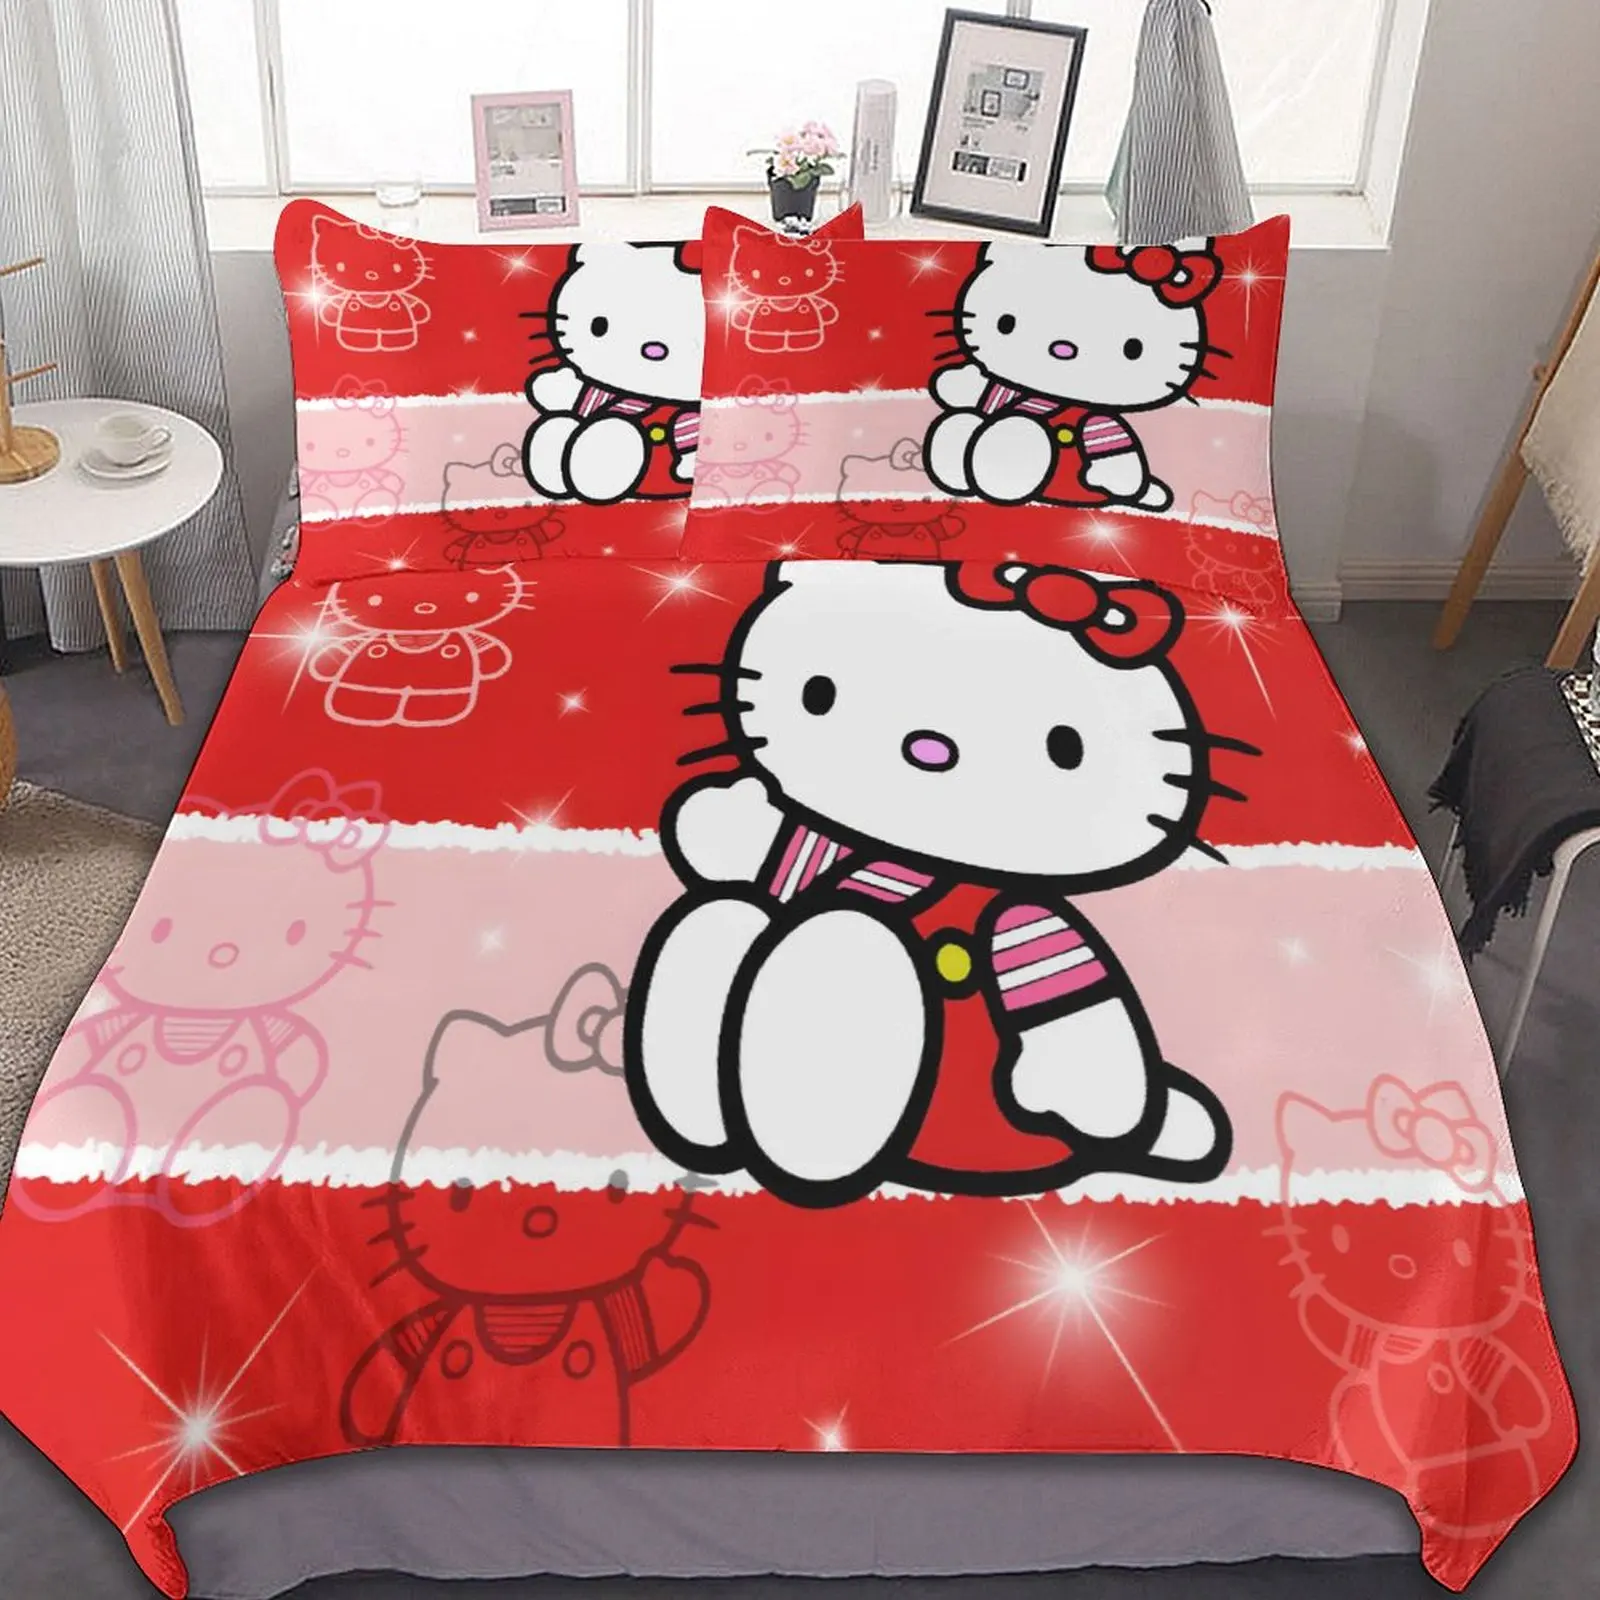 TAKARA TOMY Bedding Set Quilt Sanrio Hello Kittys Duvet Cover Comforter Pillow Case Bedclothes Children Kid Boy Bed Bedroom Set